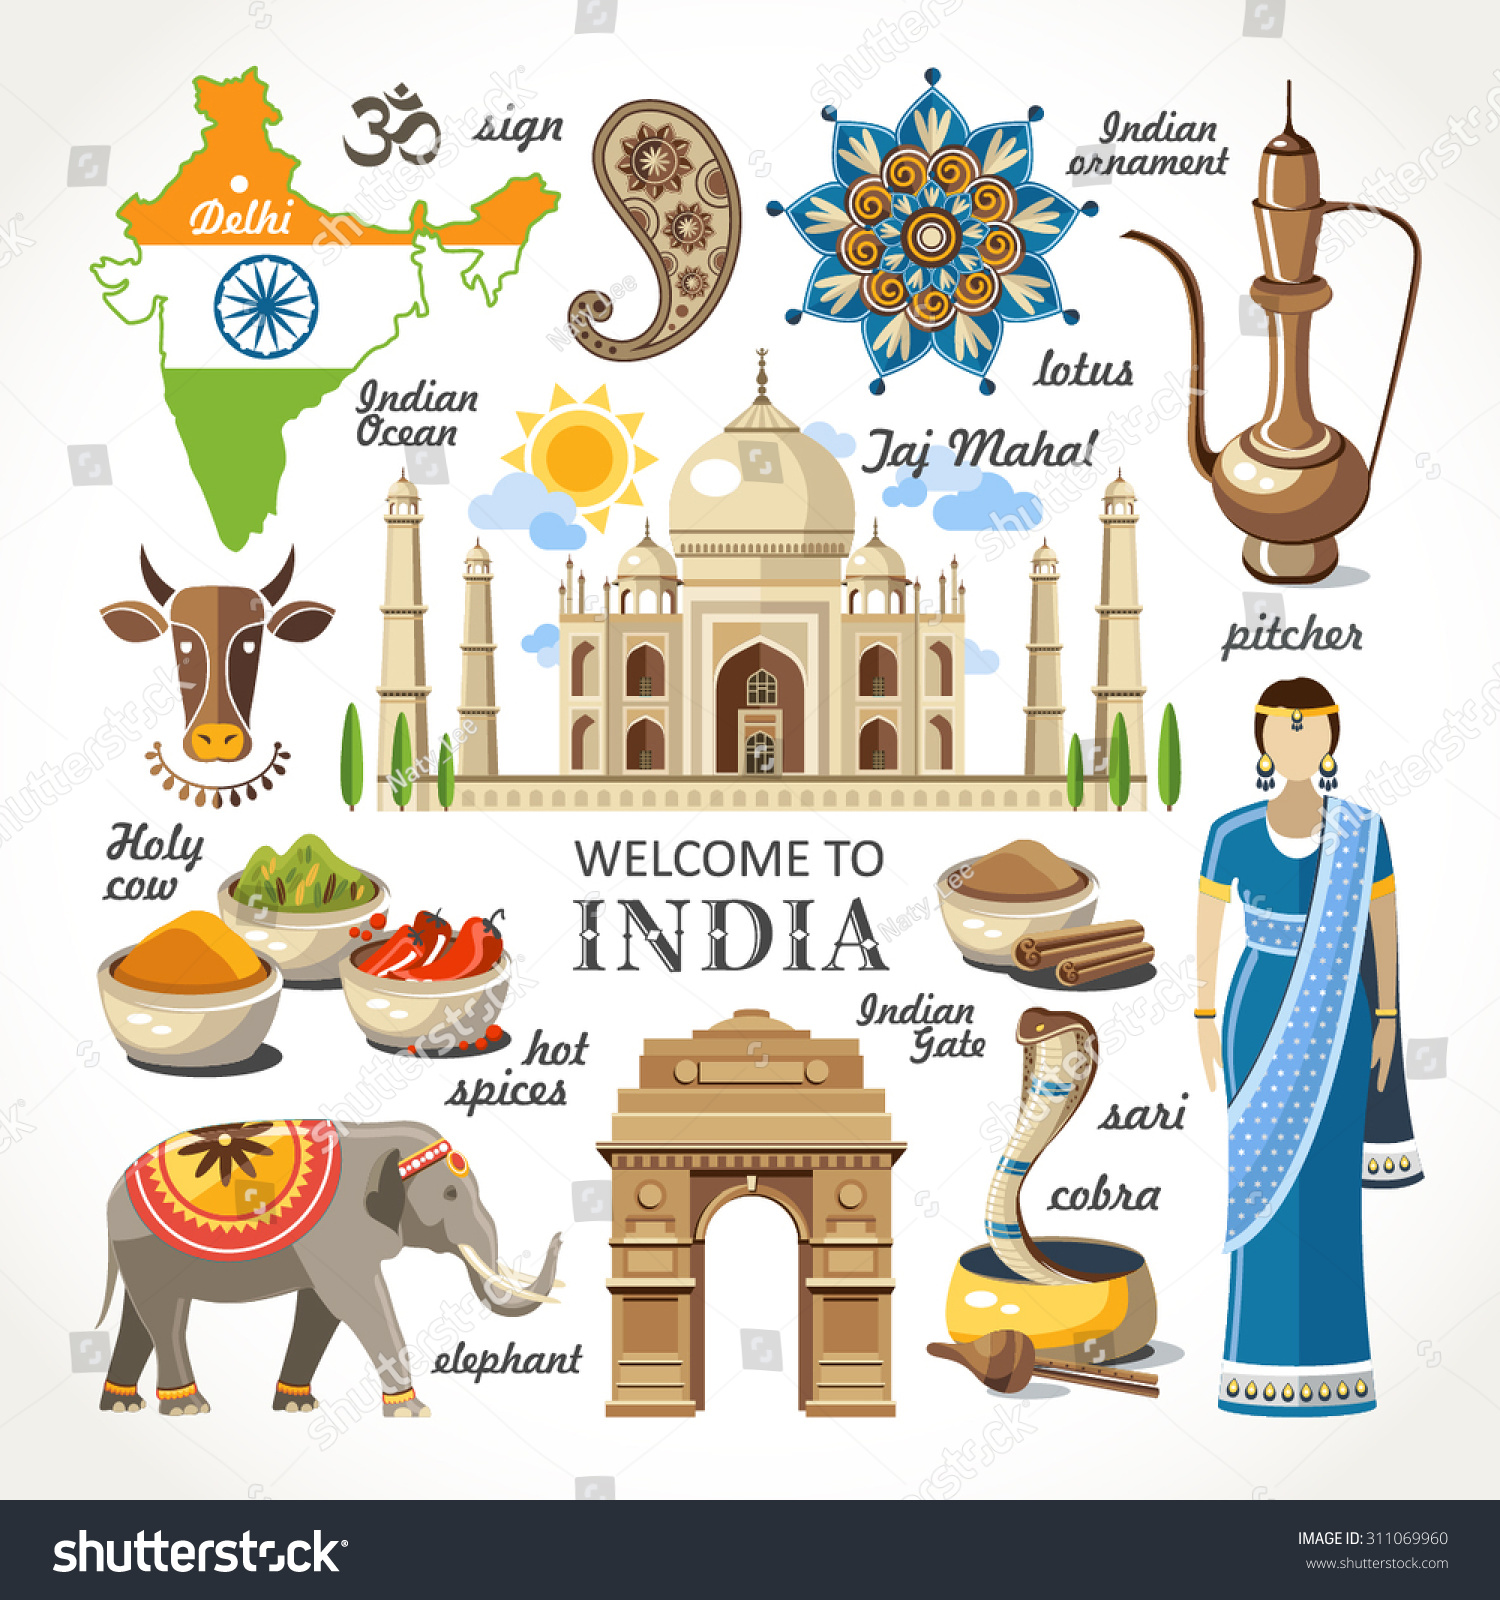 Royalty-free Travel welcome to India #311069960 Stock Photo | Avopix.com